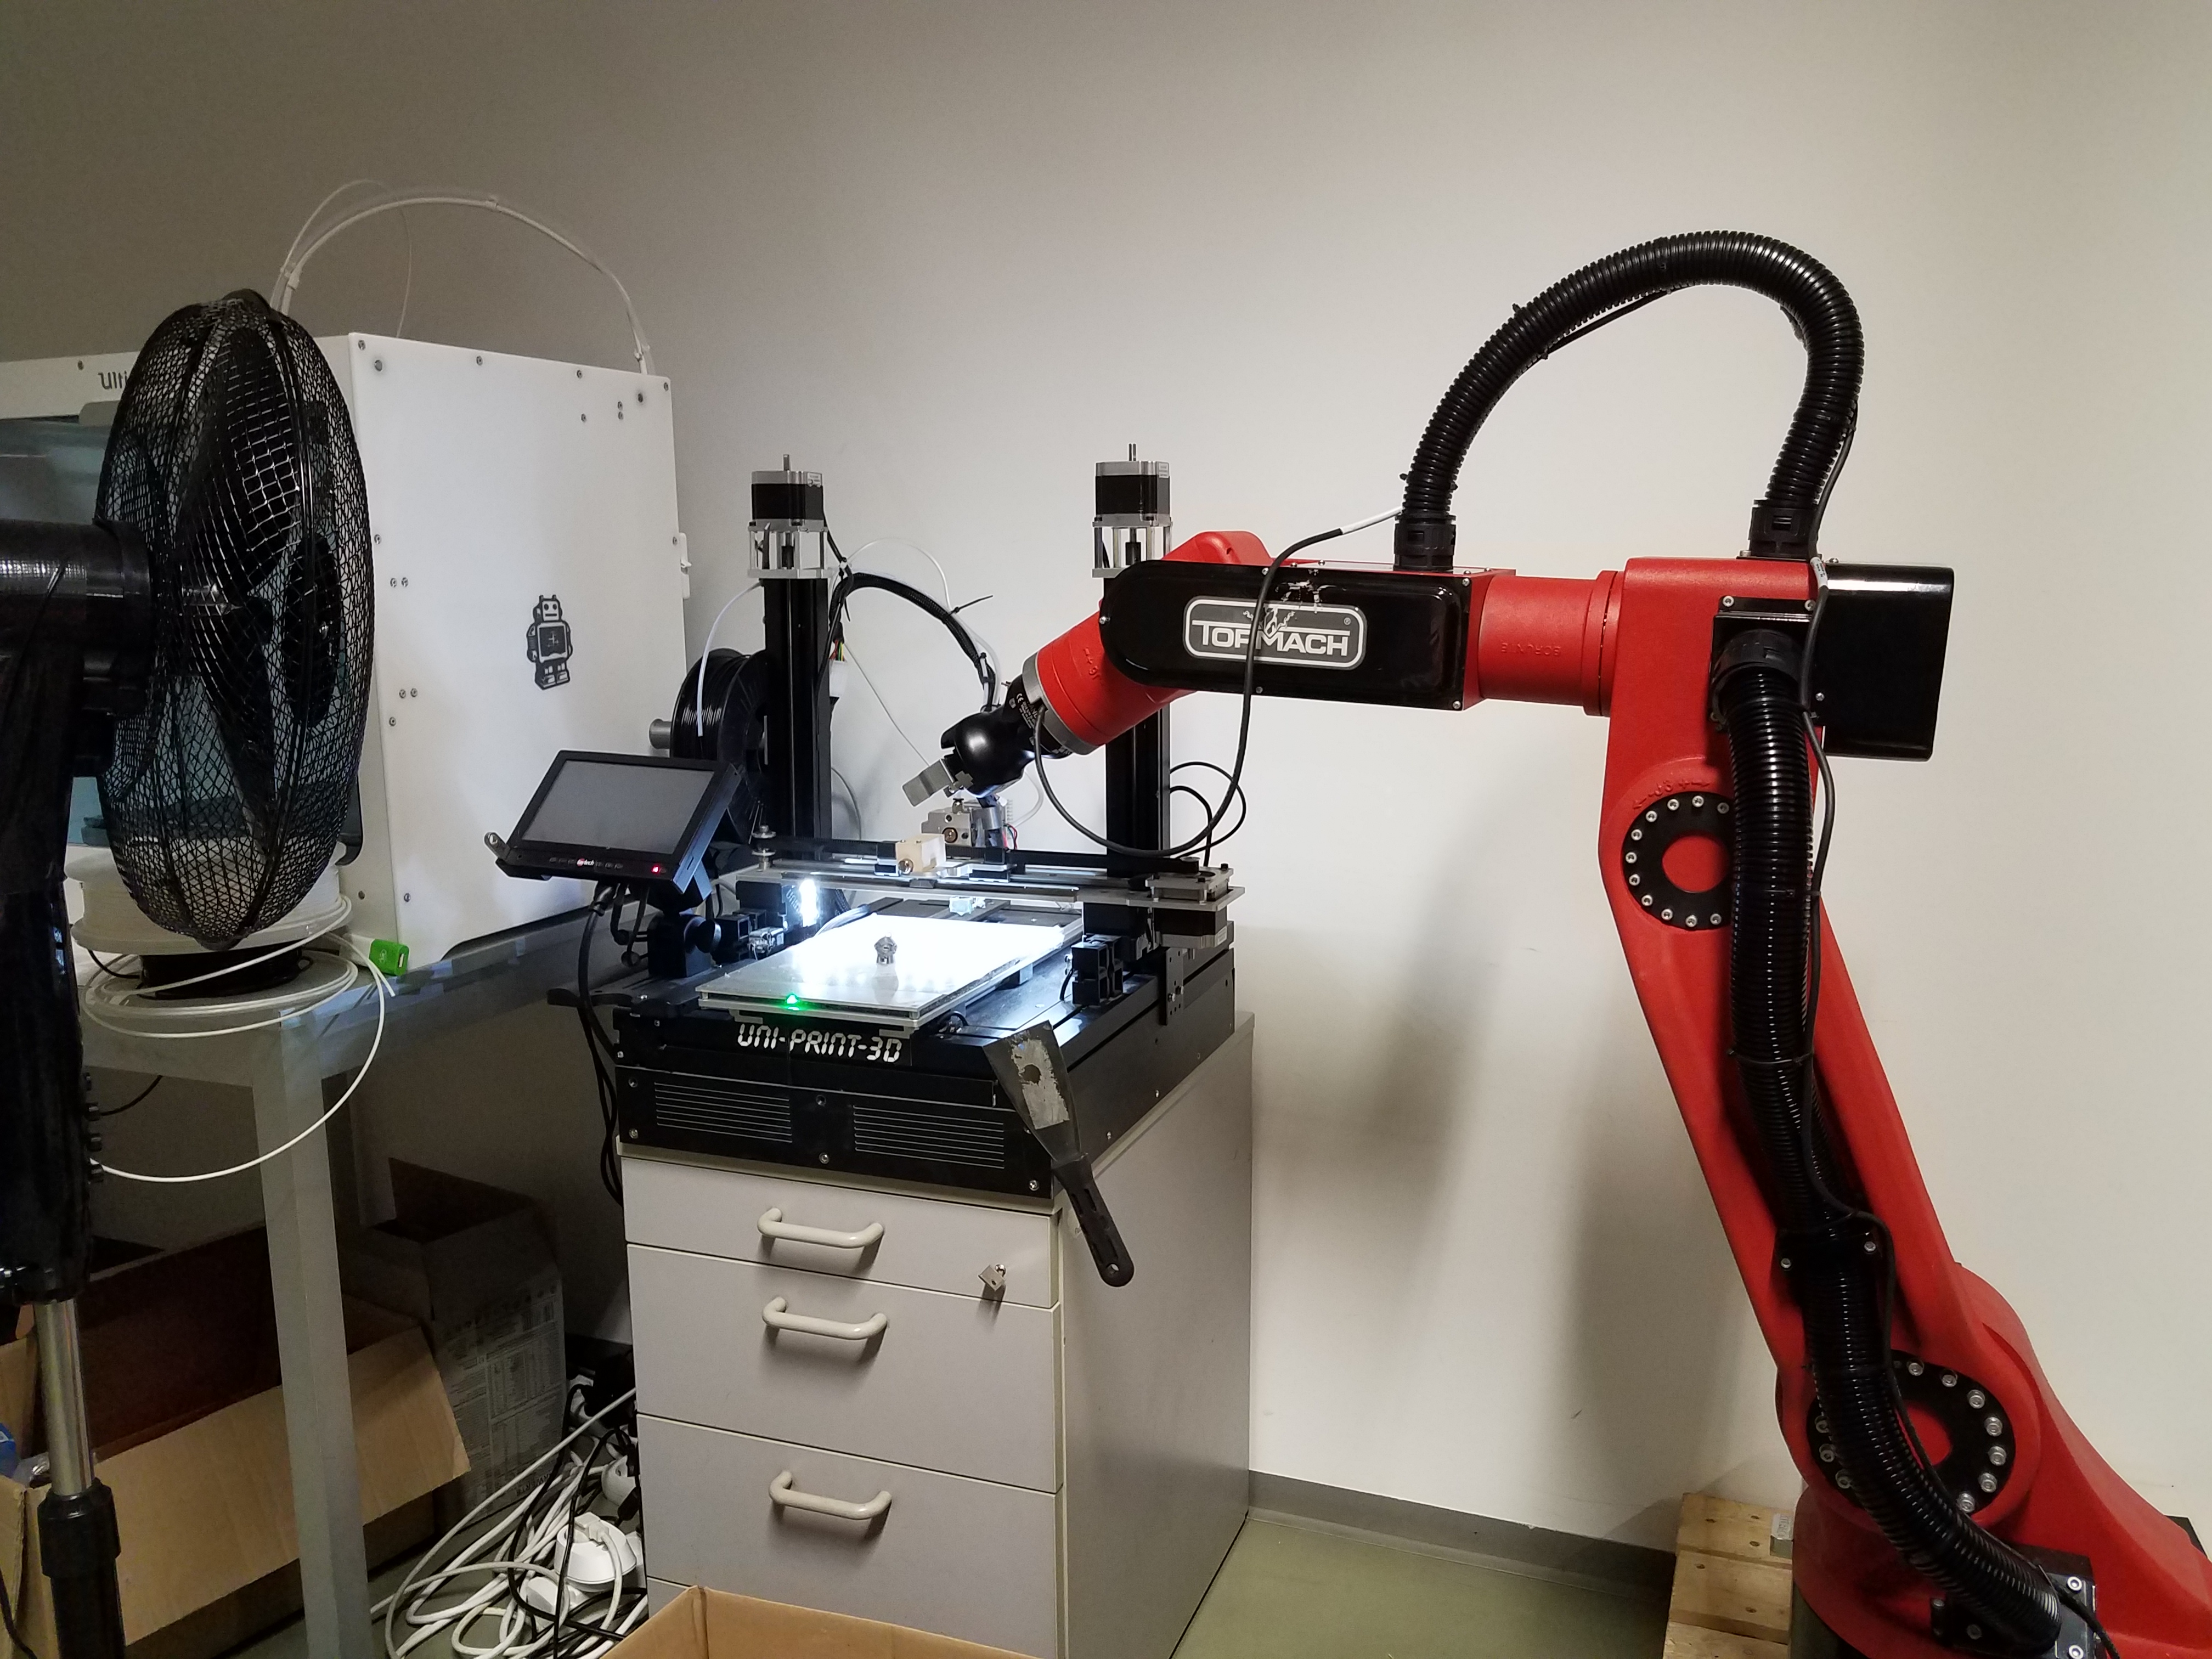 Machinekit ROS controlling an industrial robot